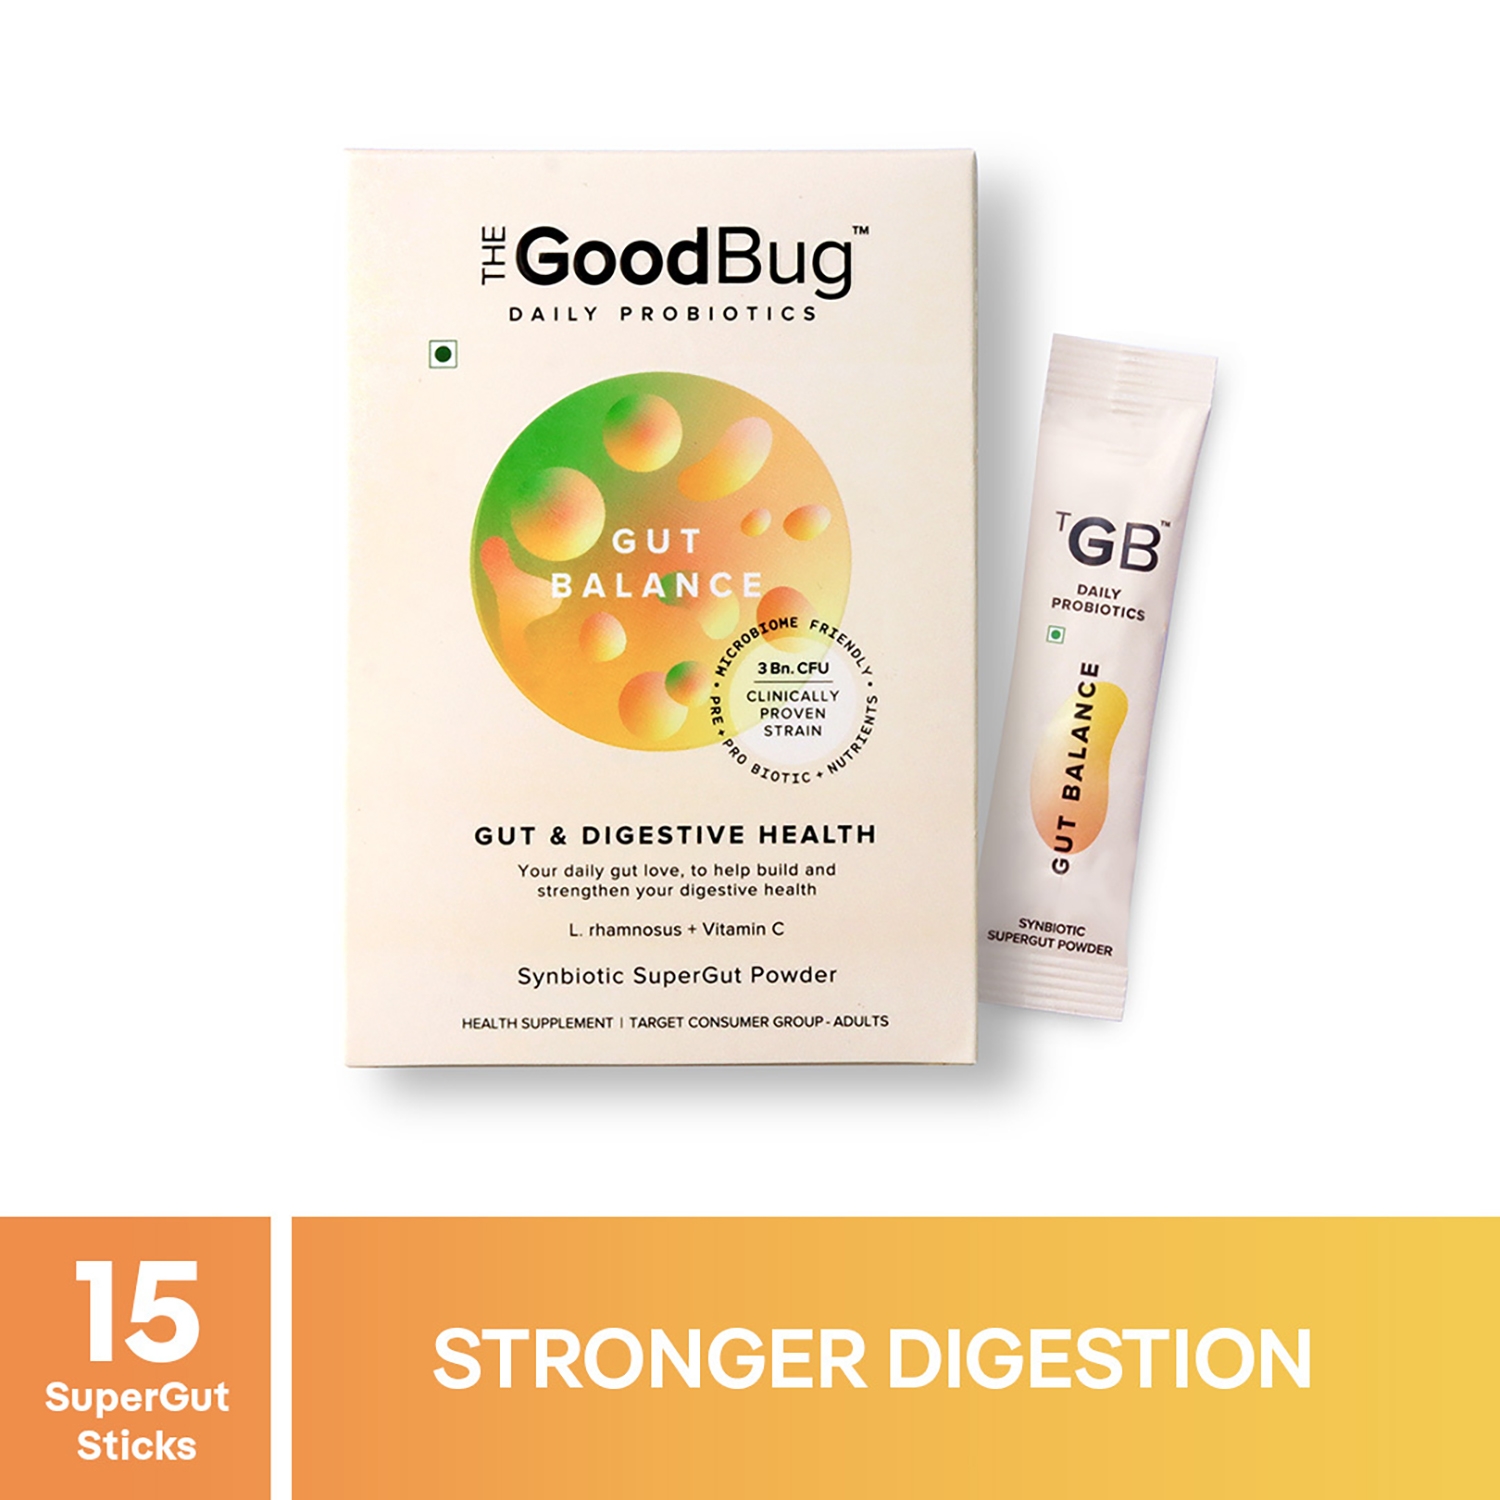 The Good Bug | The Good Bug Gut Balance SuperGut Powder Sachet For Gut & Digestive Health - (15 Pcs)